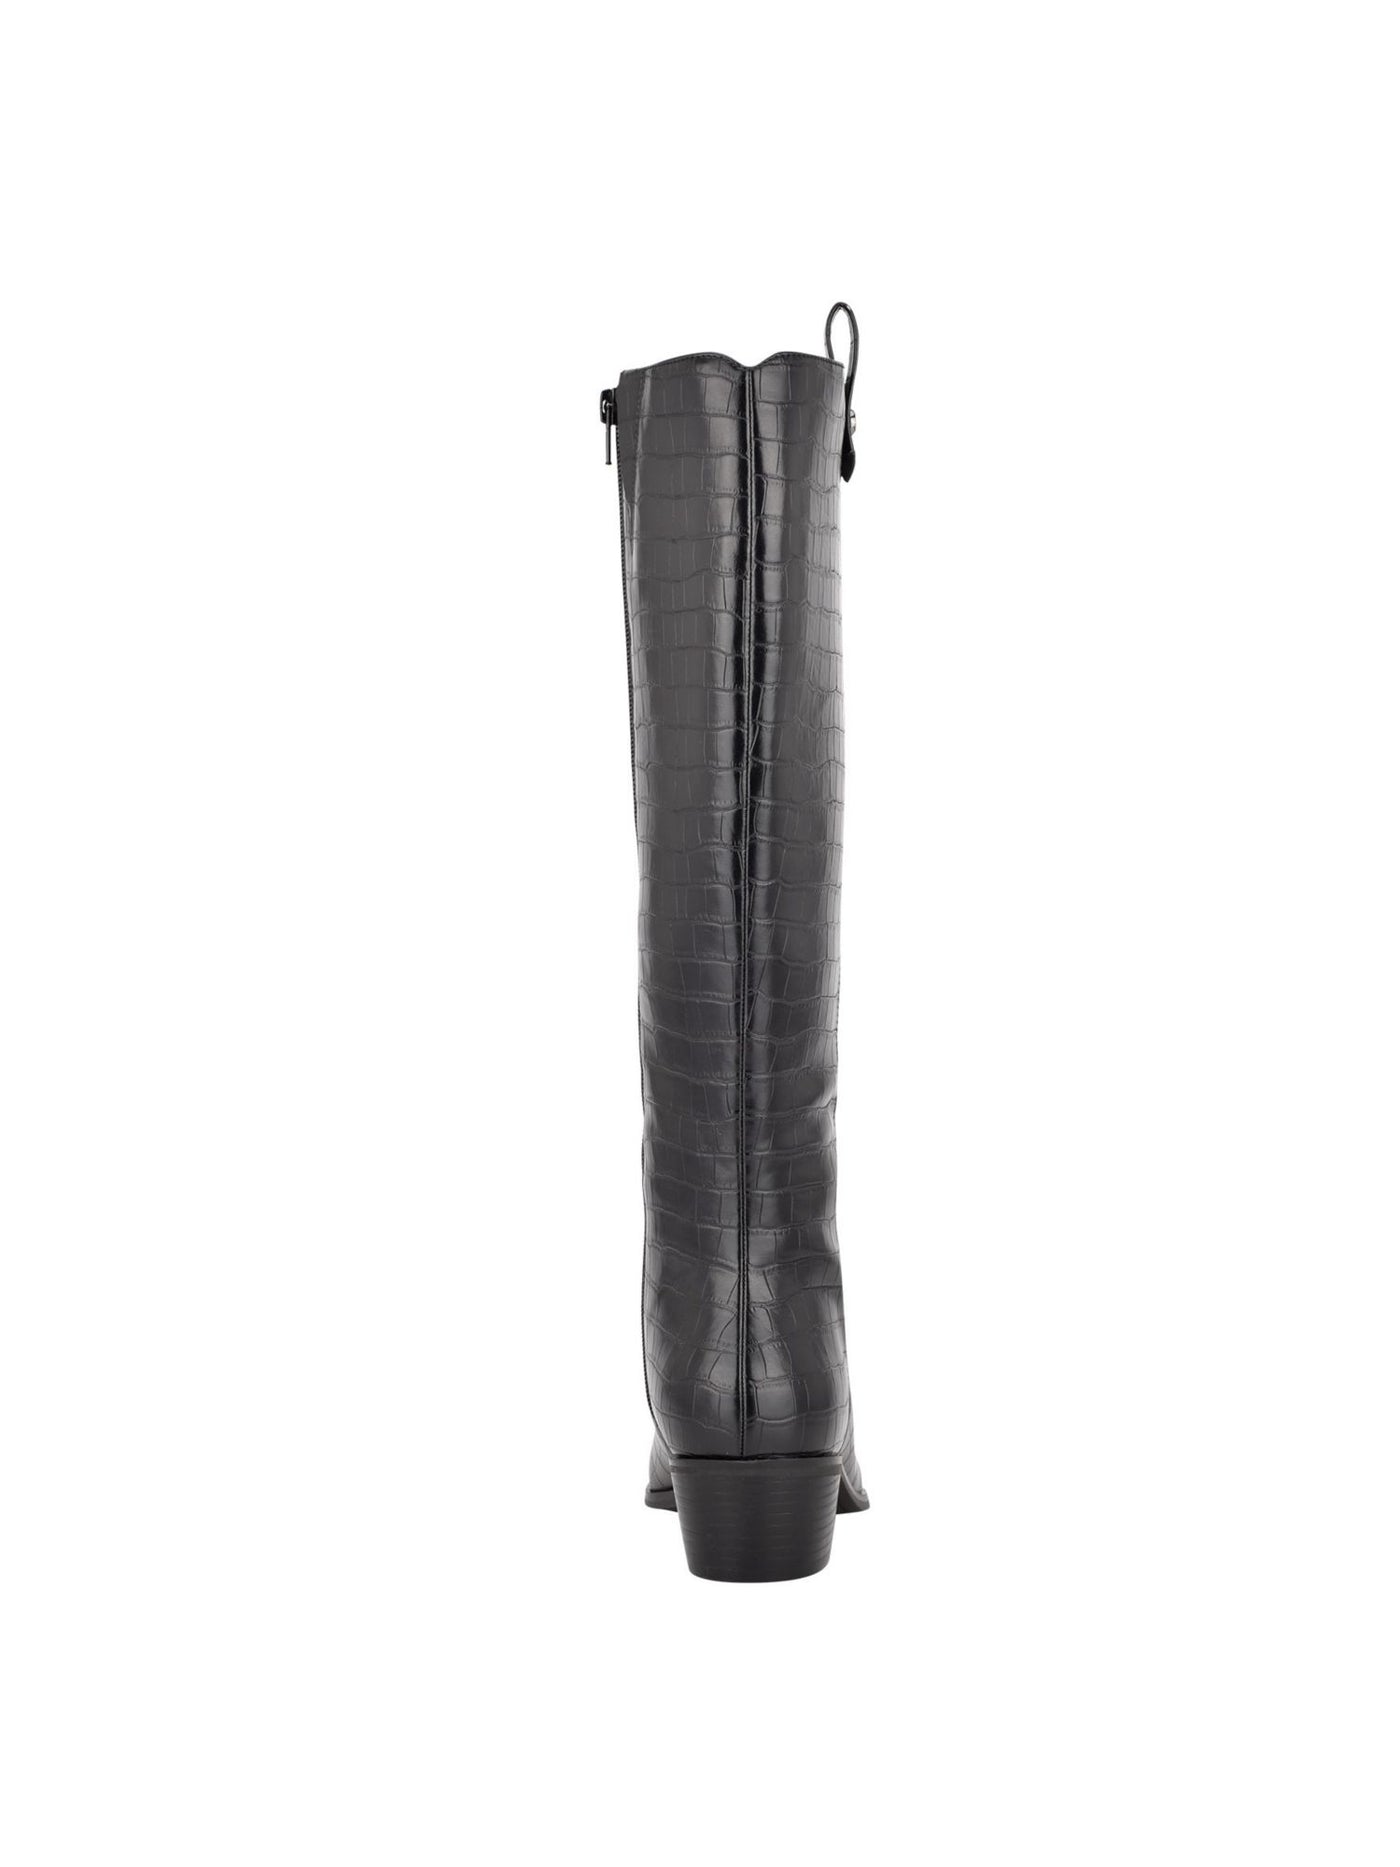 BANDOLINO Womens Black Cushioned Almond Toe Stacked Heel Zip-Up Dress Boots 8.5 M